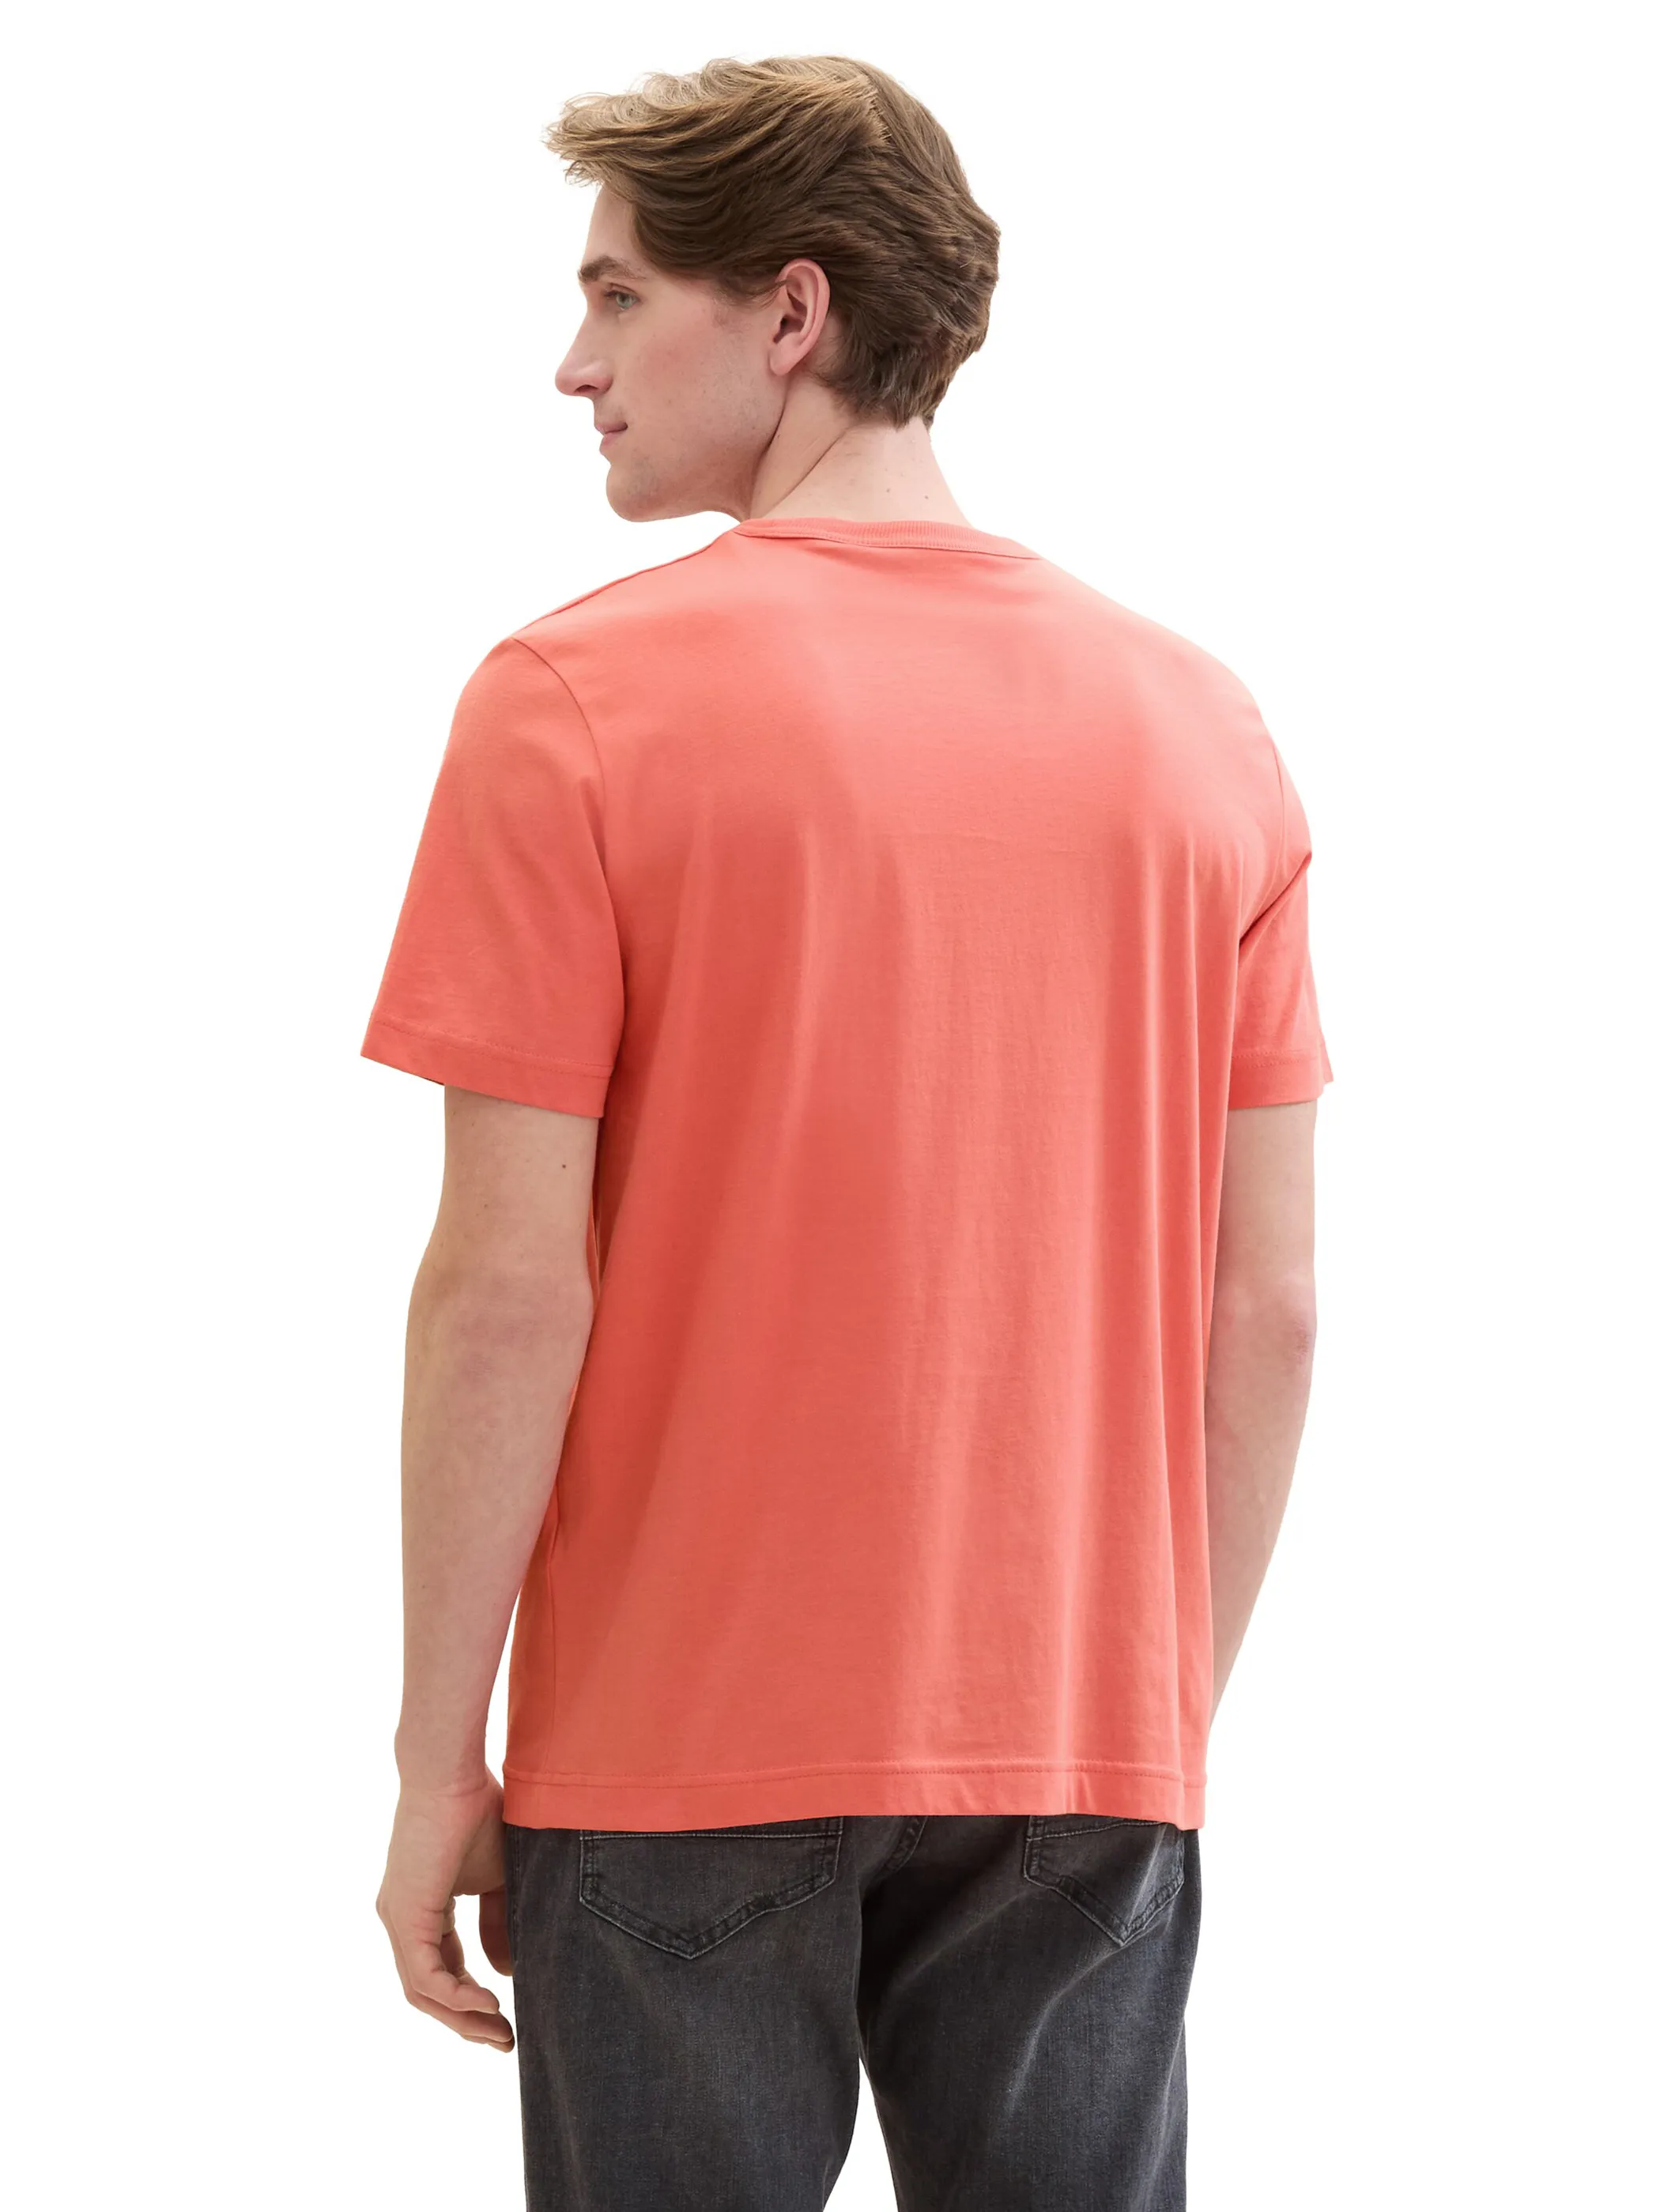 Tom Tailor 1041855 printed t-shirt Pink 895629 26202 2